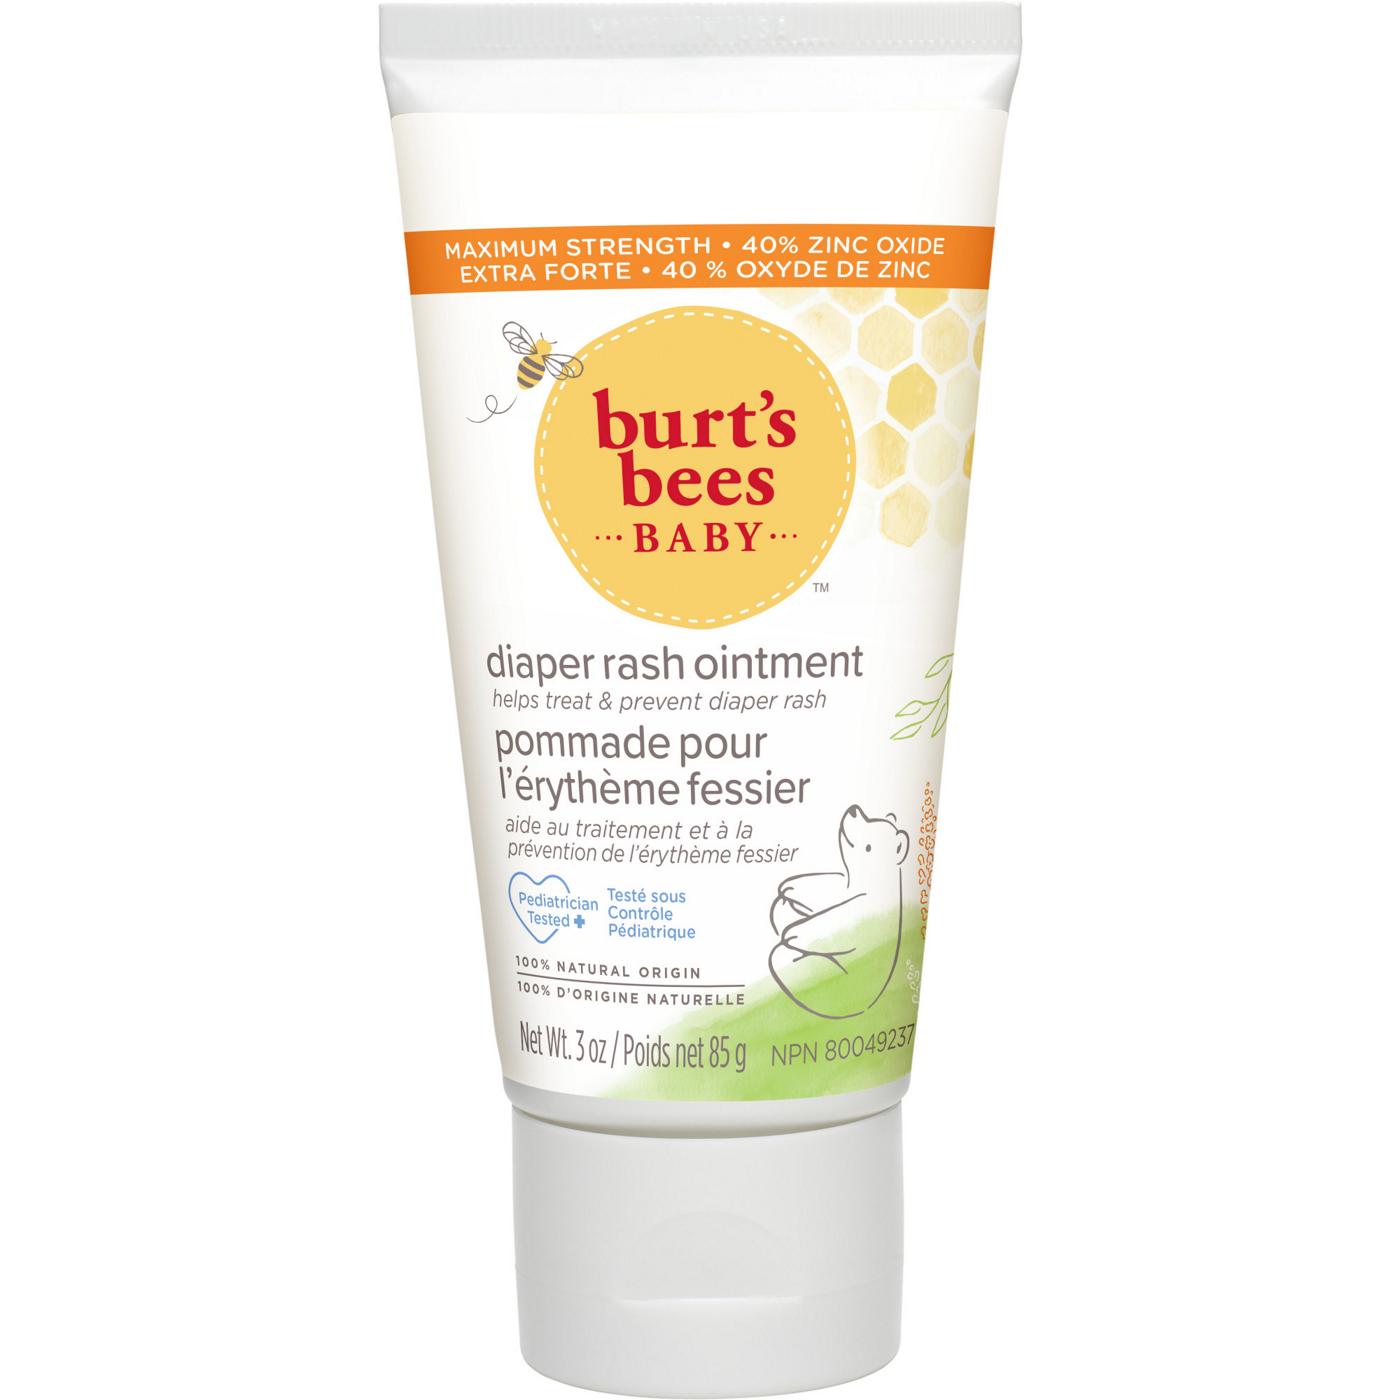 Burt's Bees Baby Diaper Rash Ointment; image 1 of 9